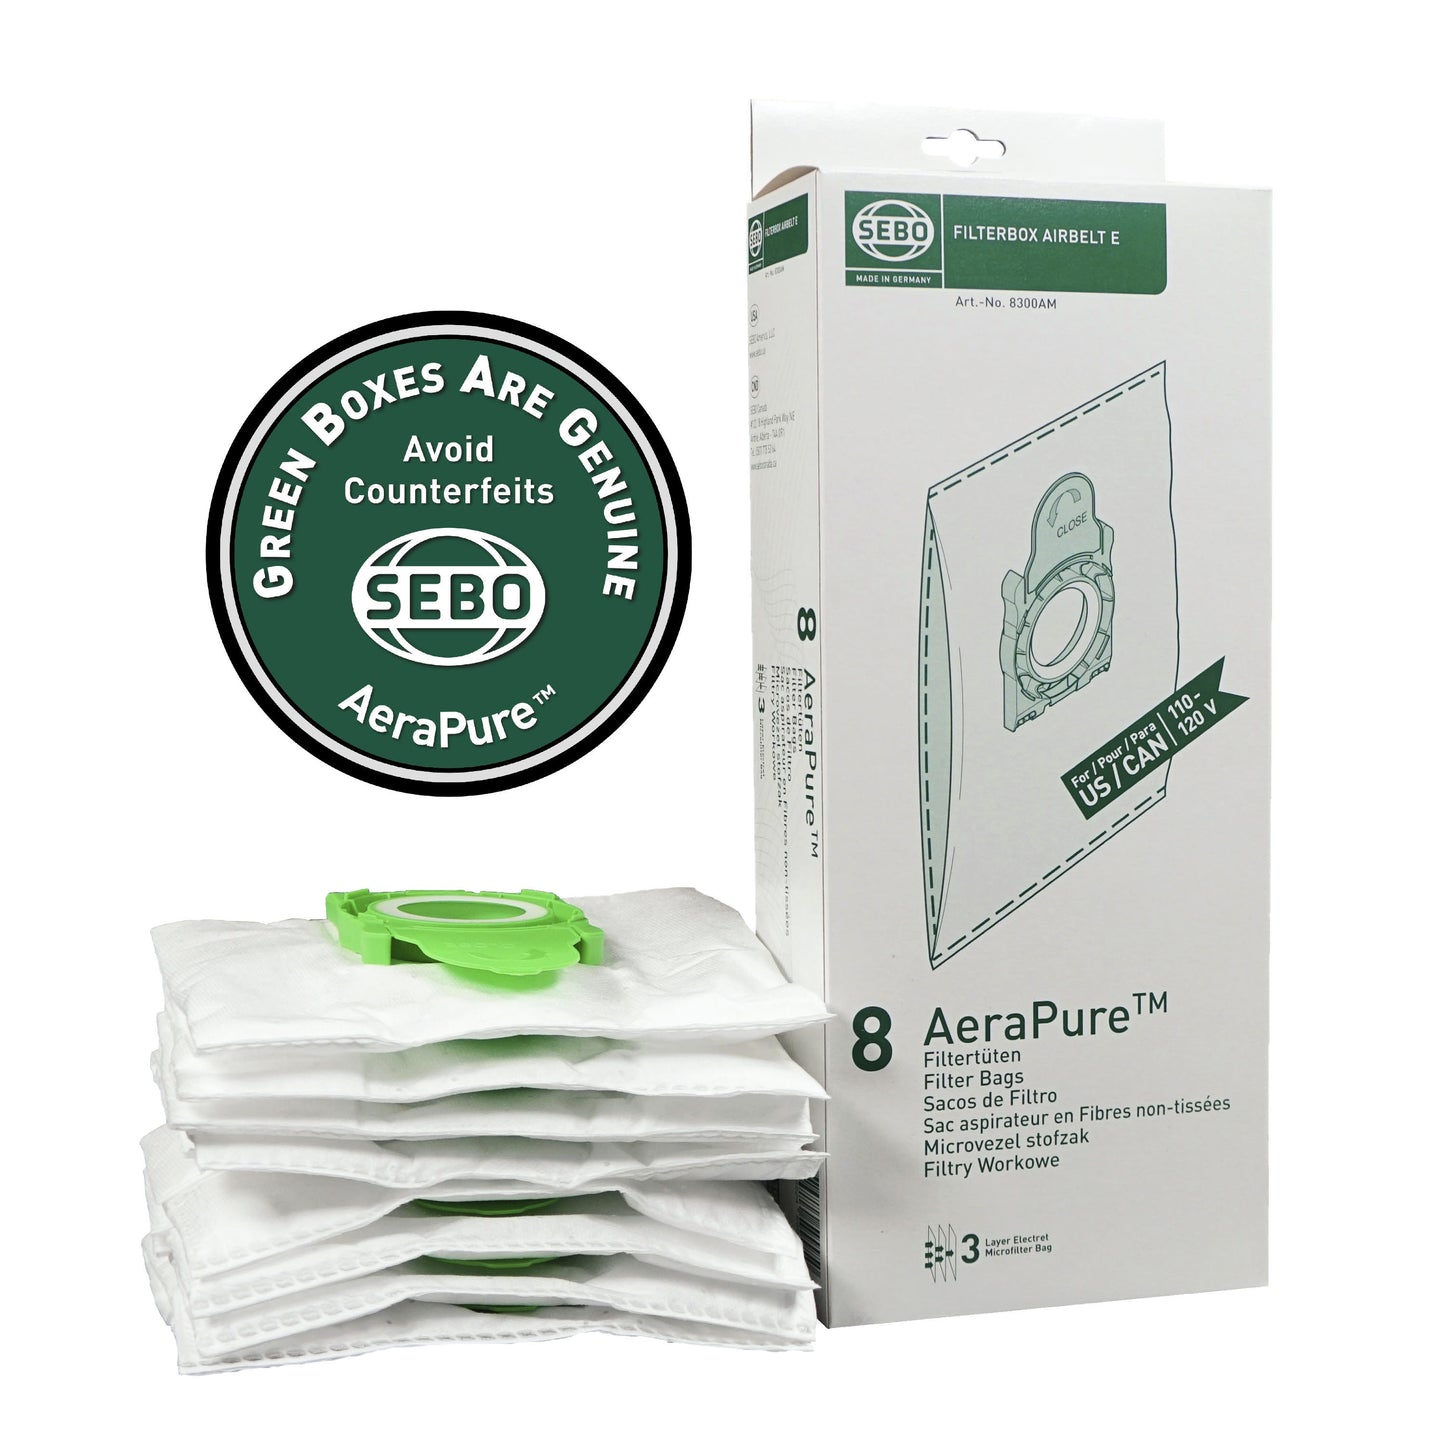 SEBO AIRBELT E AeraPure Filter Bags (8-Pack)